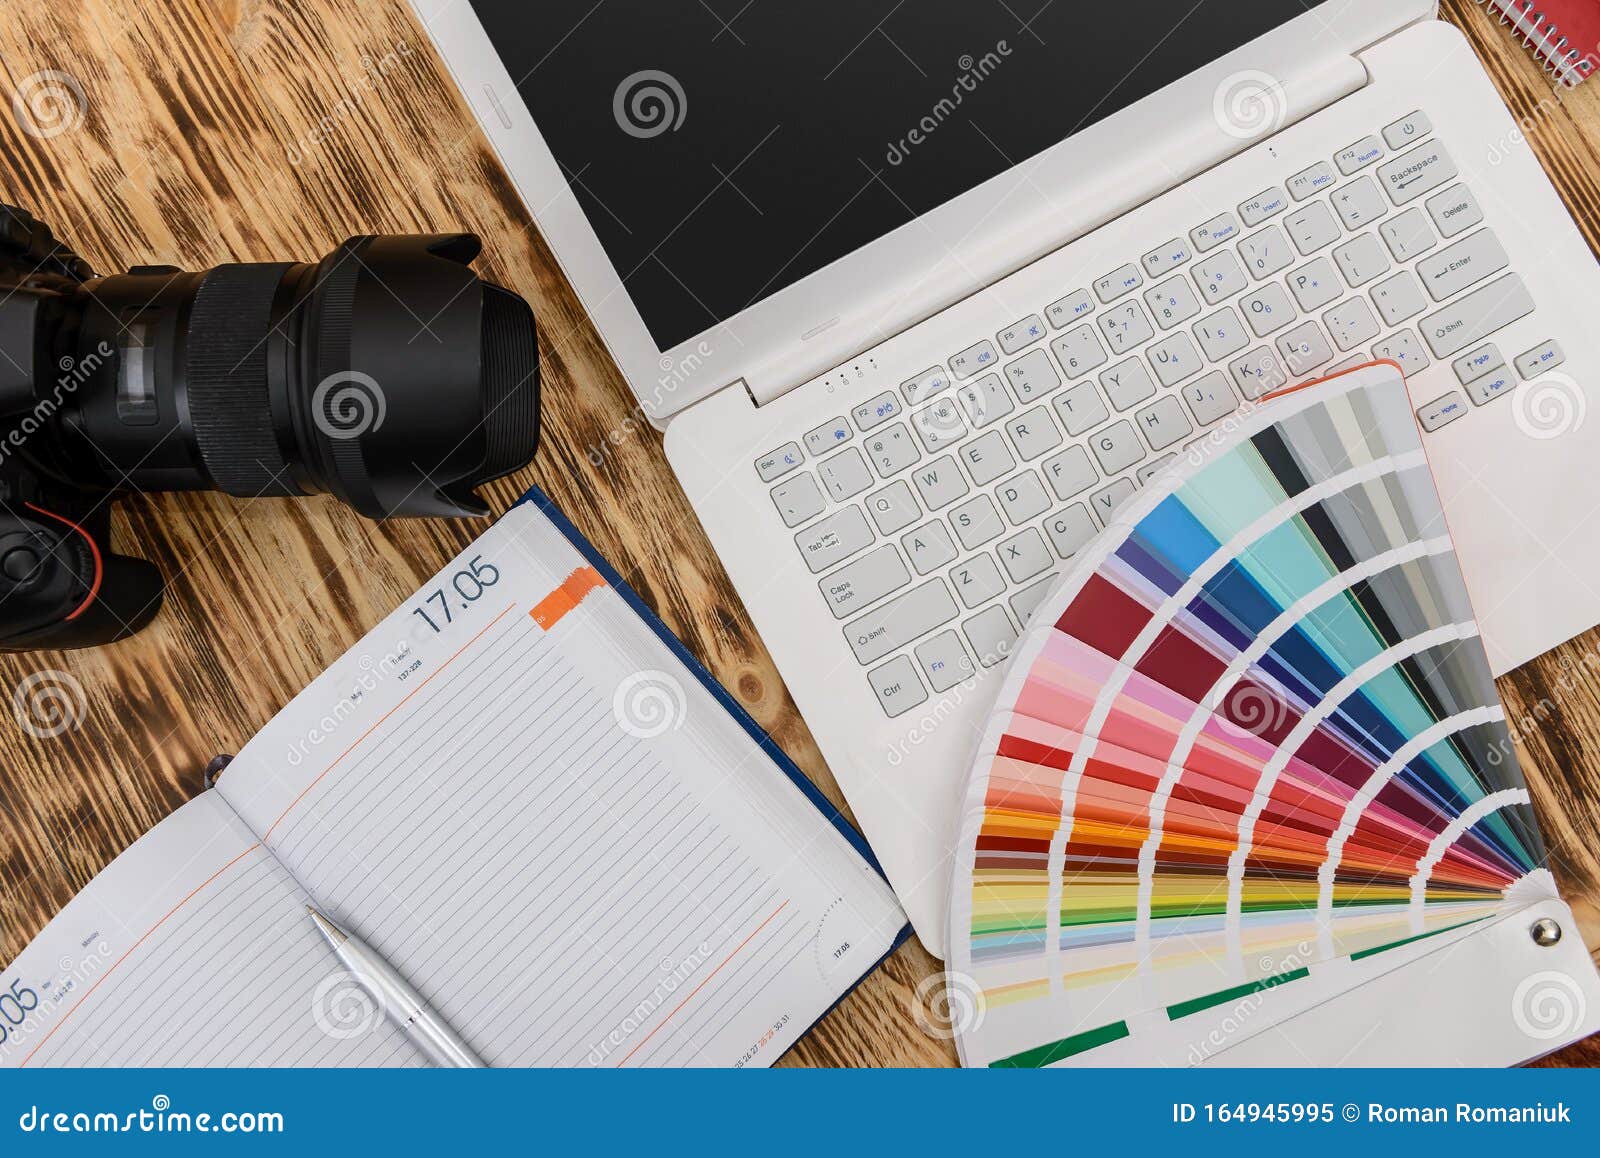 Digital Camera with Laptop and Color Sampler on Desk Stock Image